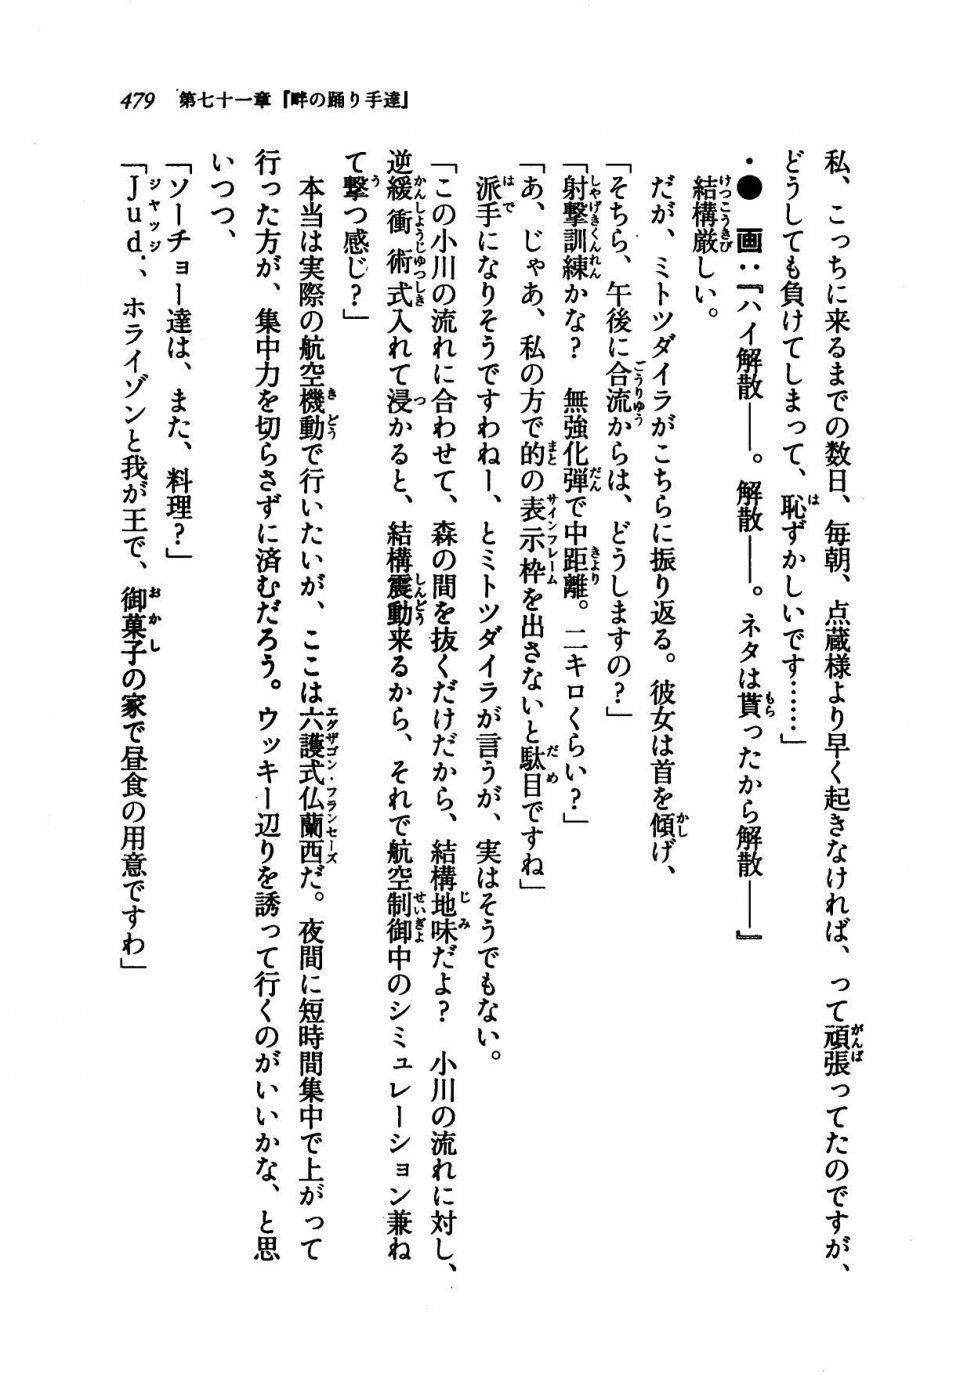 Kyoukai Senjou no Horizon LN Vol 21(8C) Part 1 - Photo #478